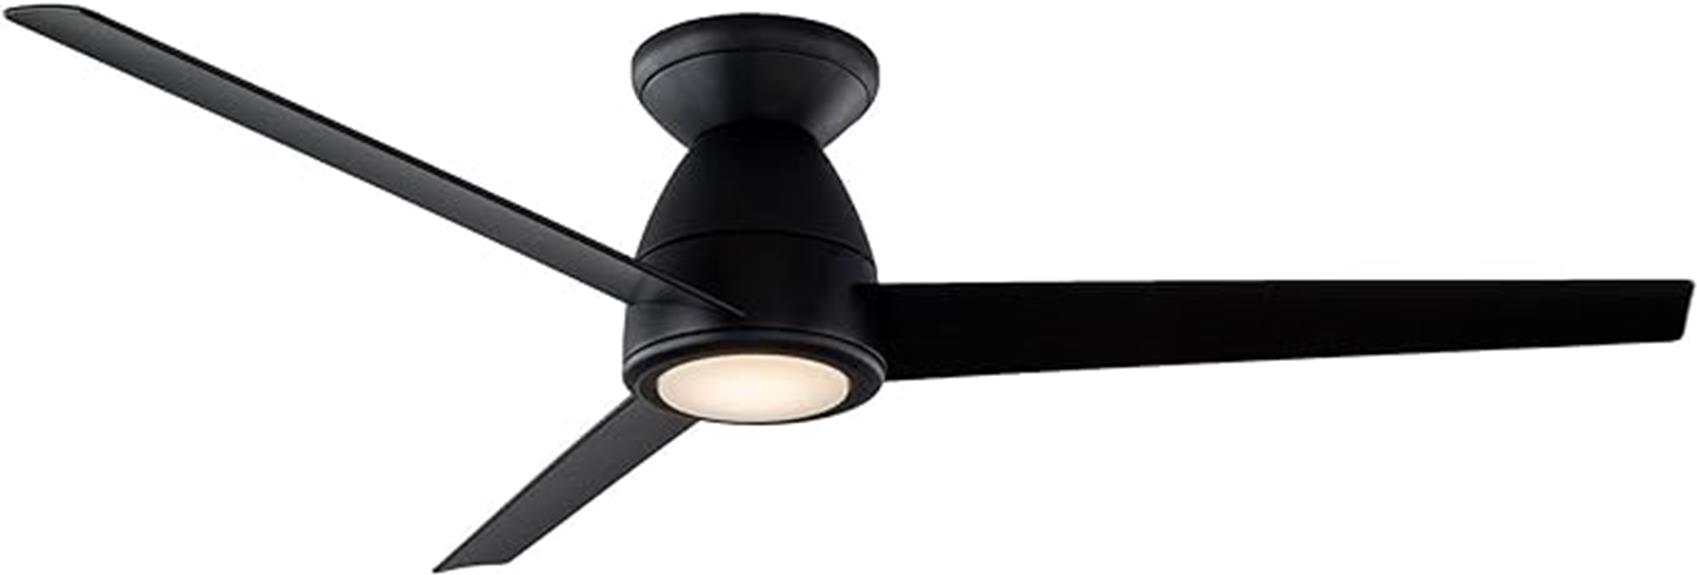 52in matte black ceiling fan with led light kit